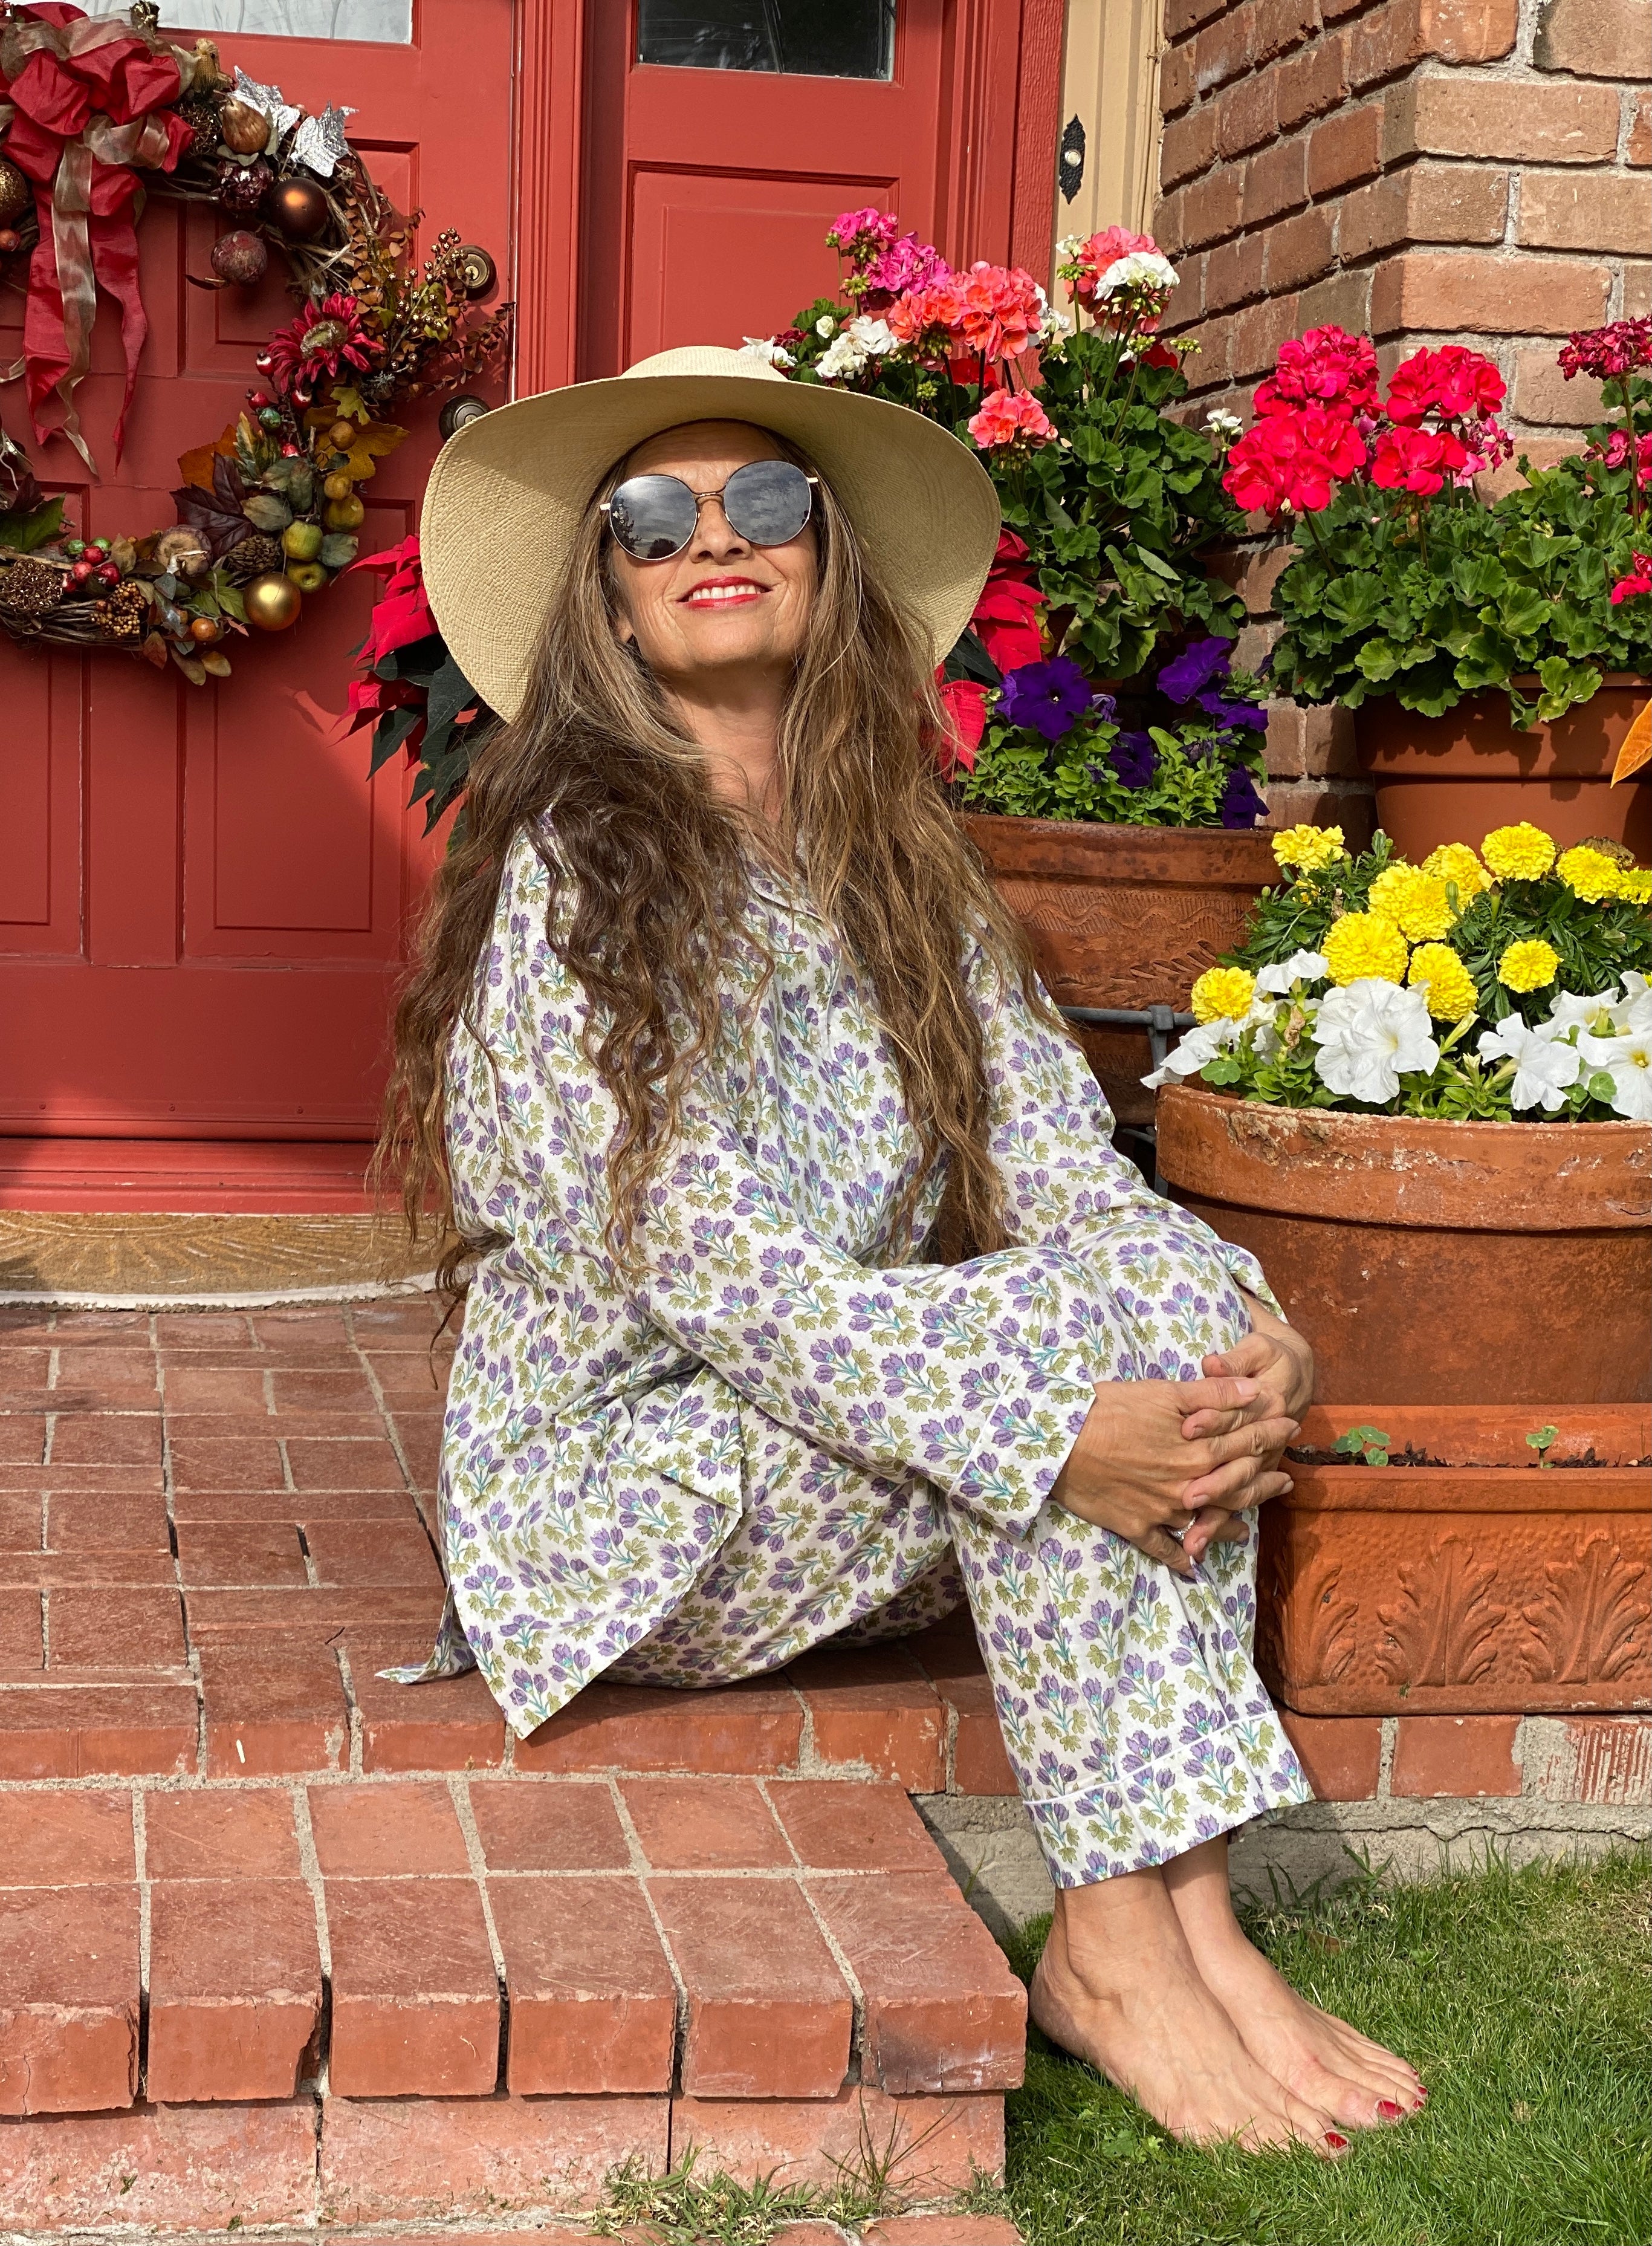 Teresa Lavendar Cotton Floral Pajamas Long Sleeve STORE CREDIT EXCHANGE ONLY